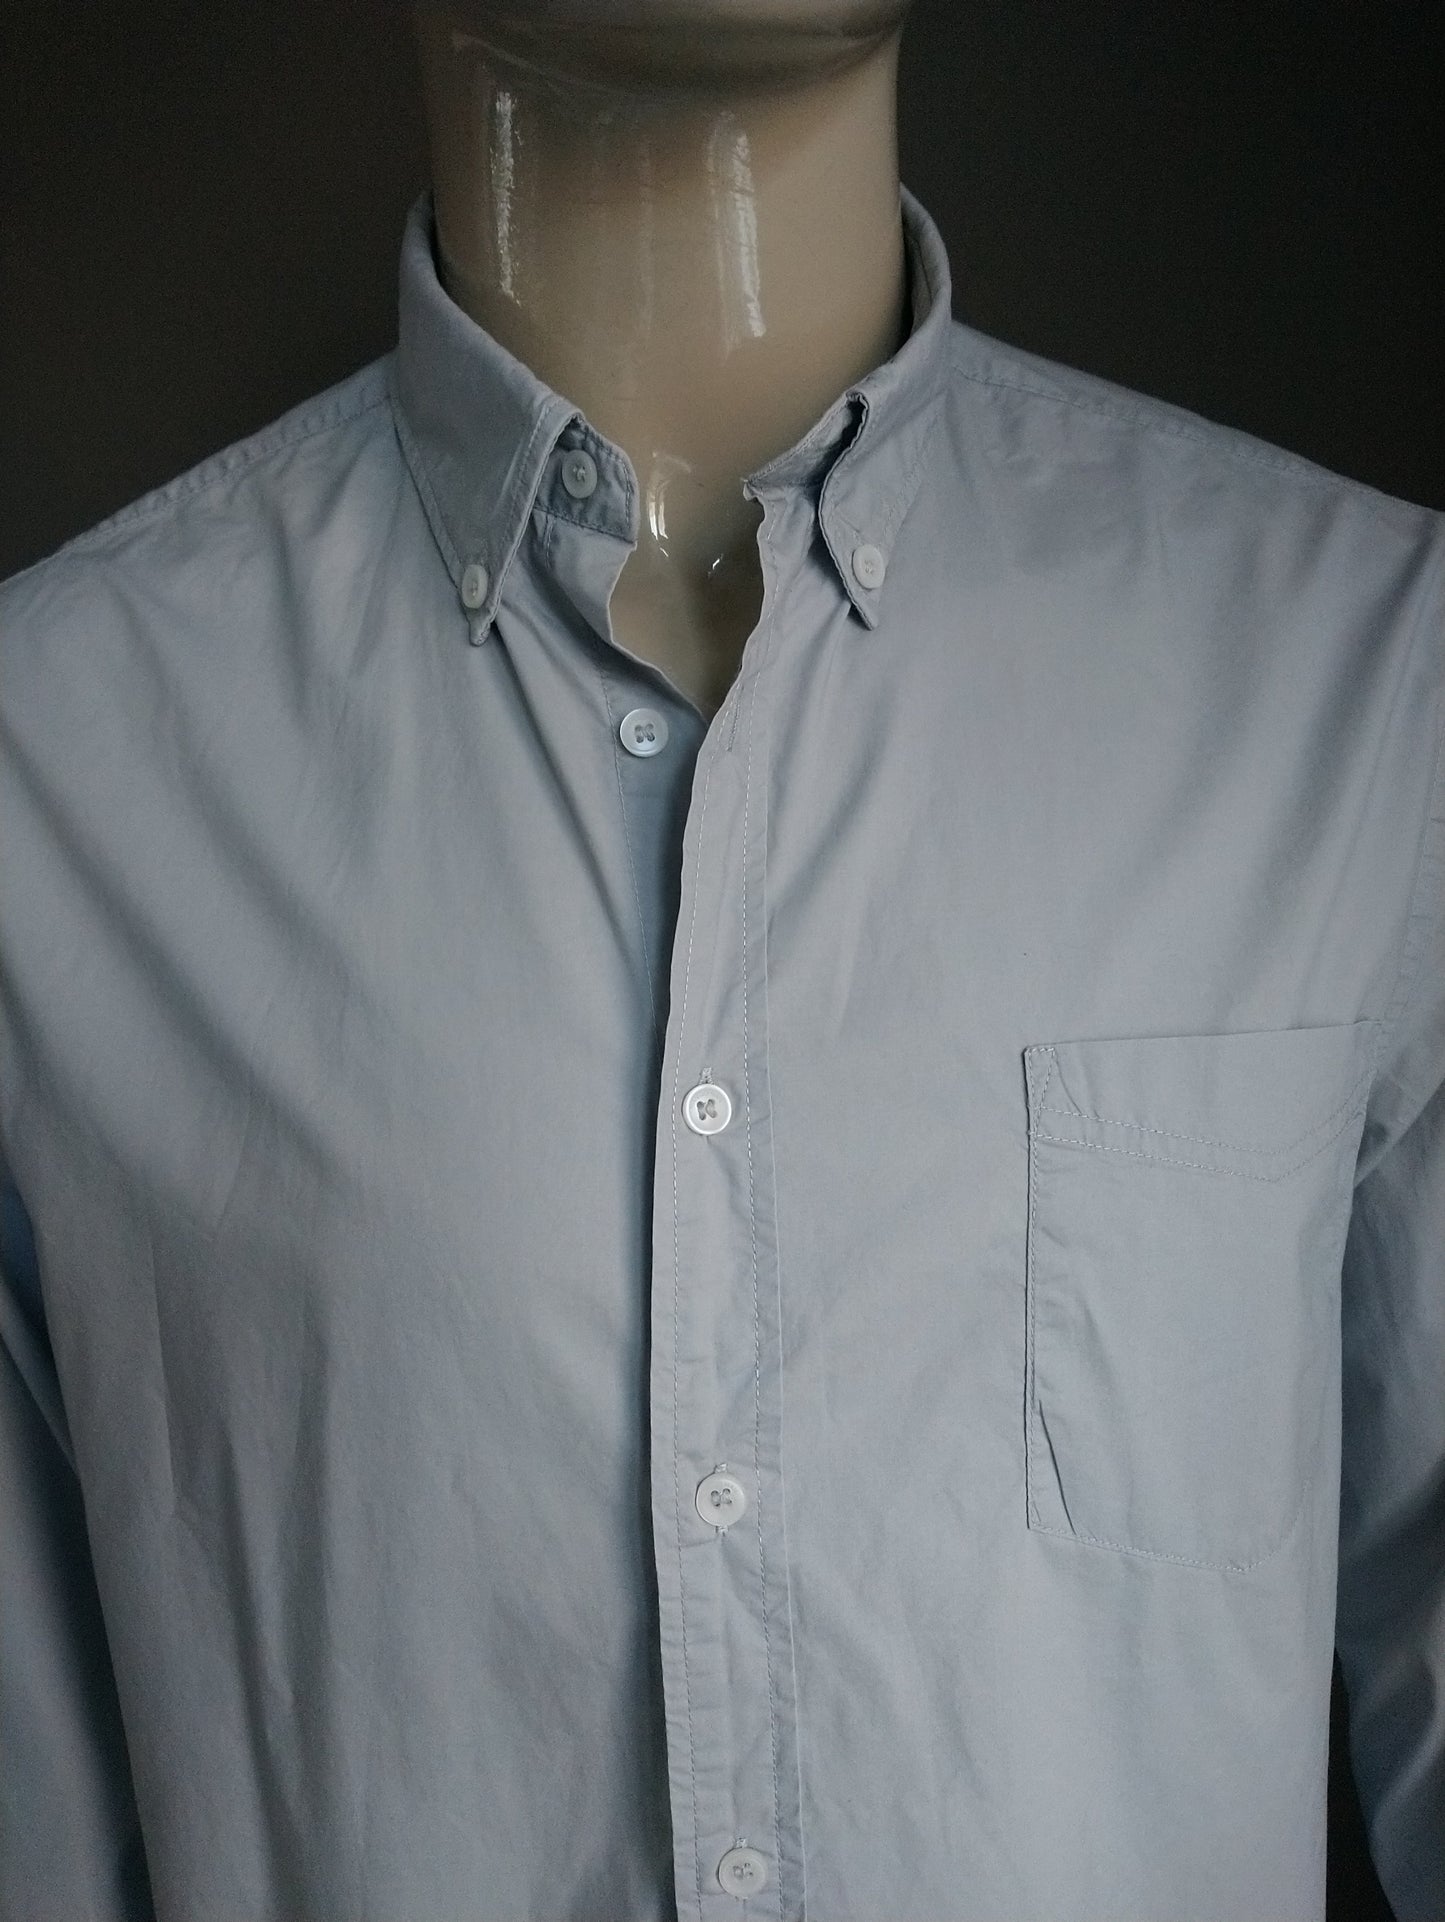 Mango shirt. Light gray colored. Size 2XL / XXL. Slim fit.